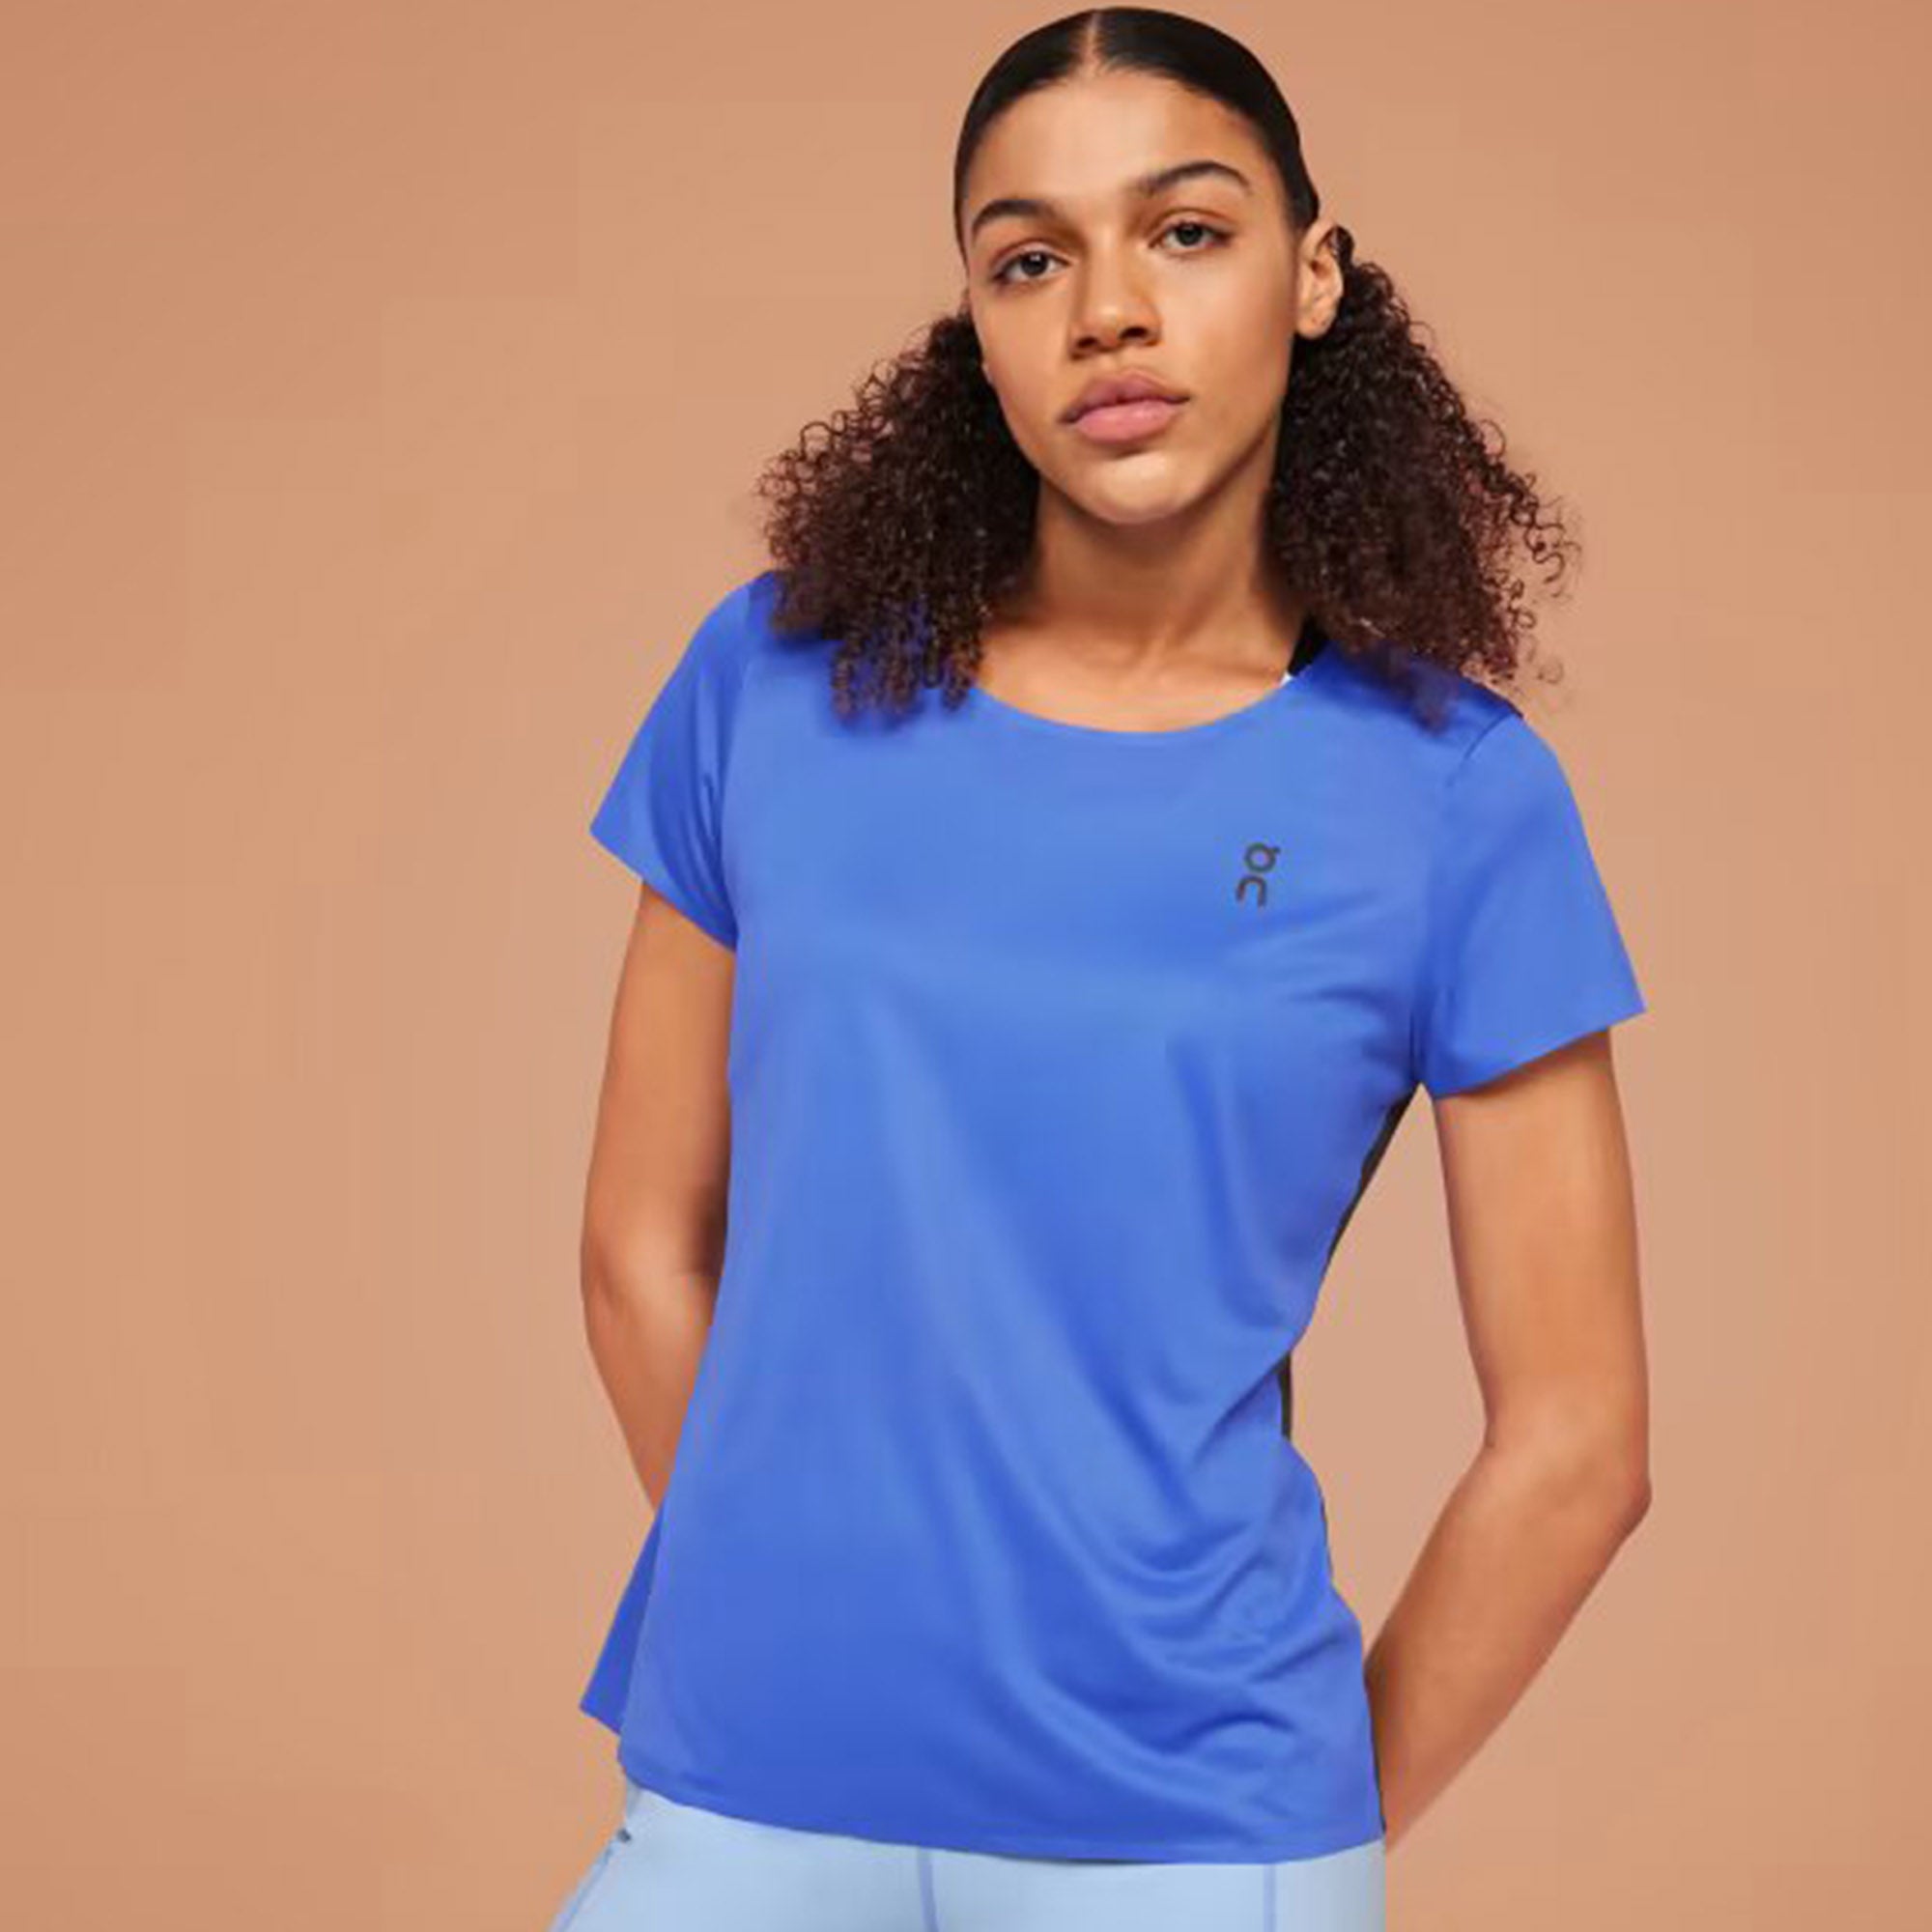 On Running Womens Performance T-shirt Blue Small